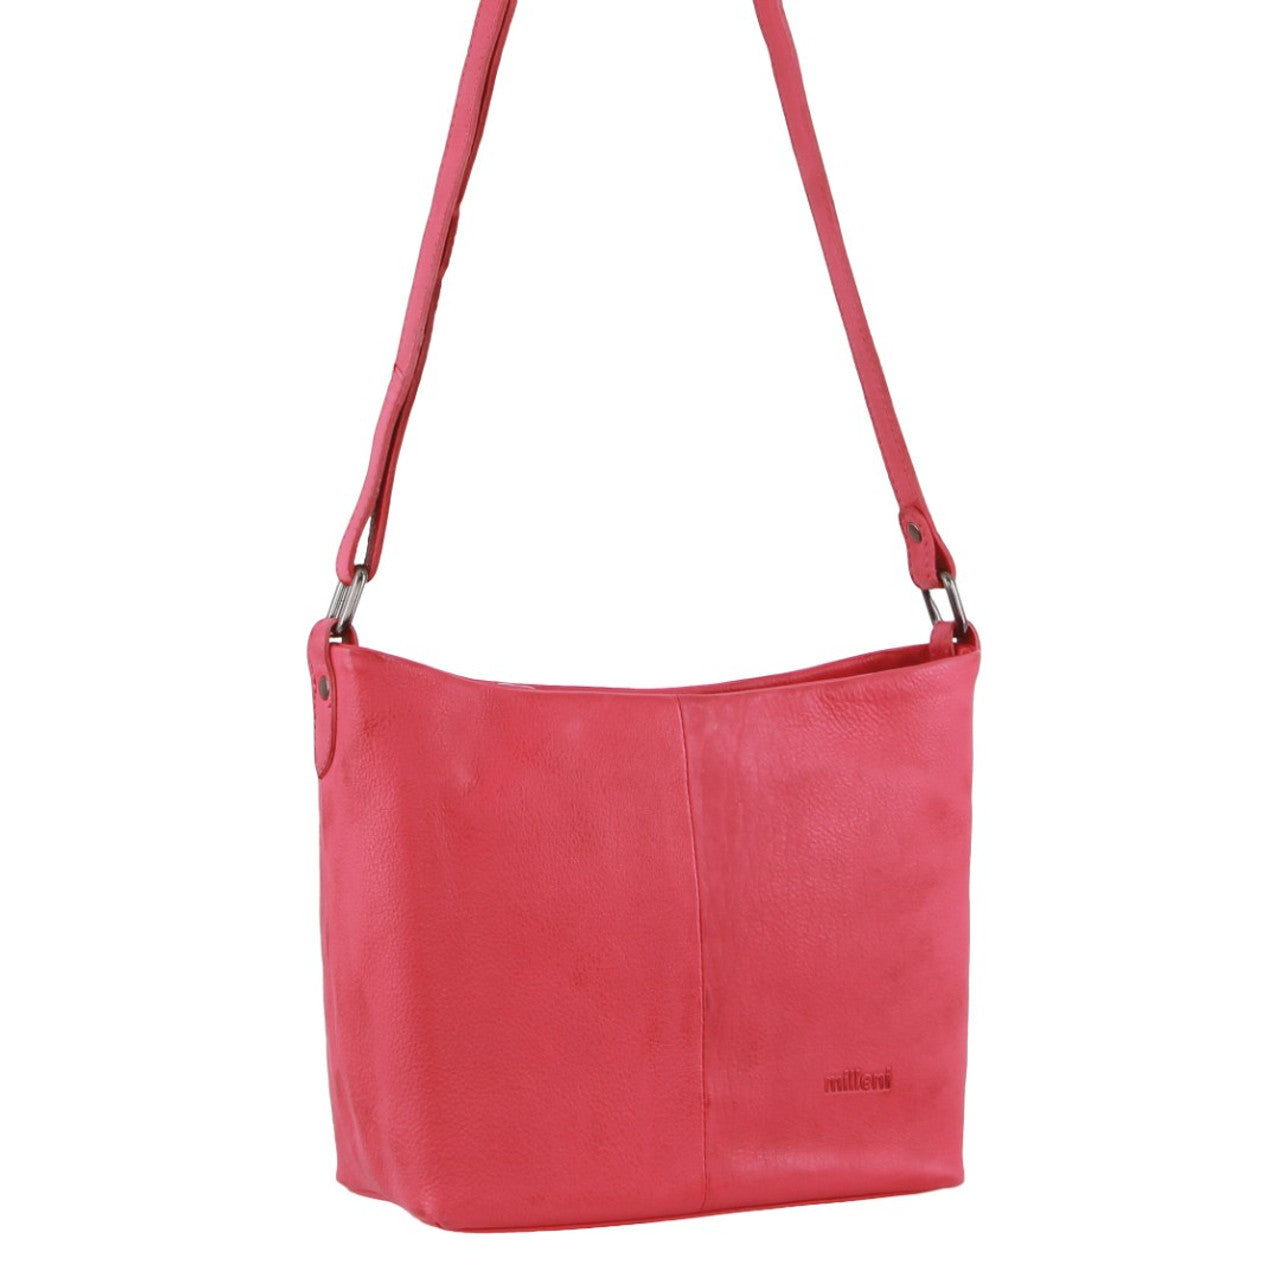 Milleni - NL2789 Leather cross body bag - Pink-1